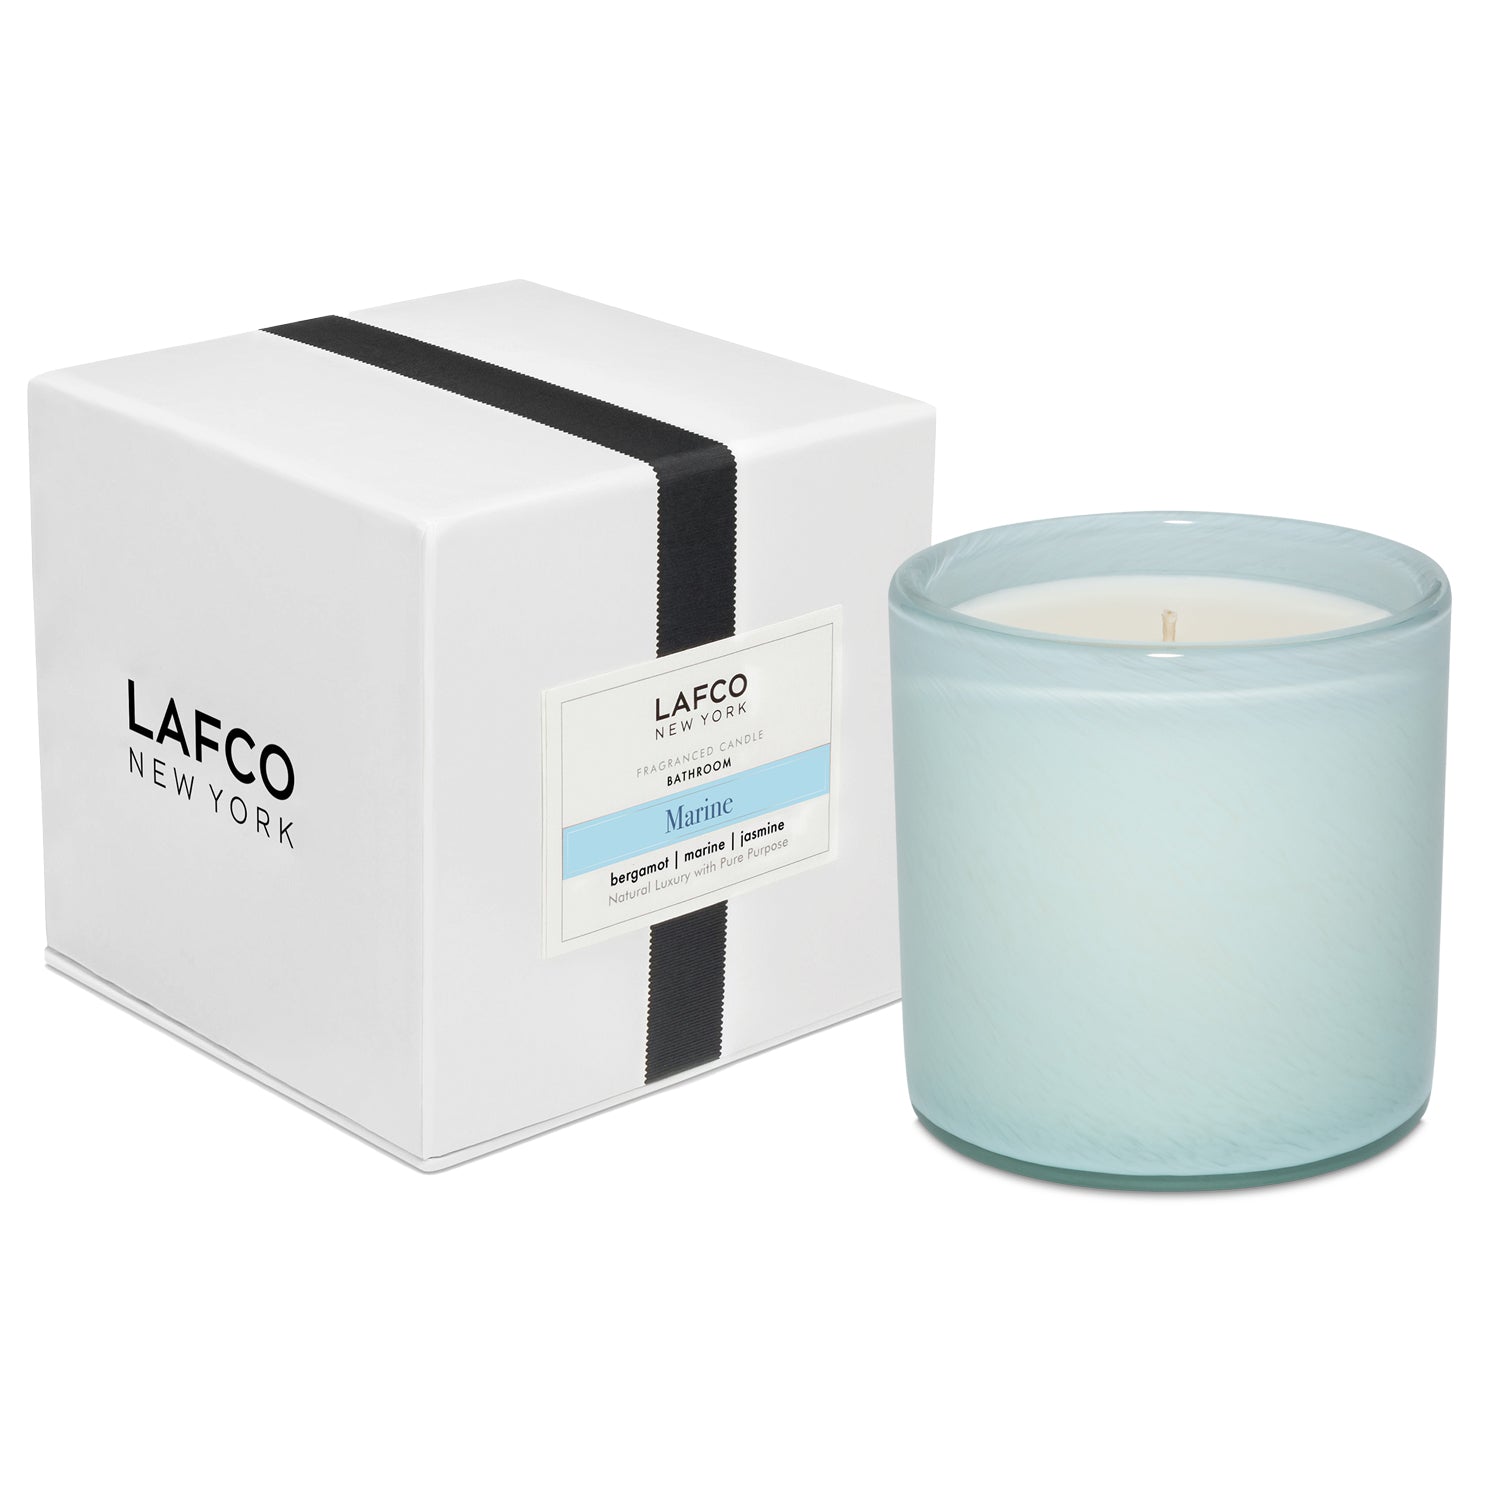 LAFCO 15.5 oz Bathroom (Marine) Candle